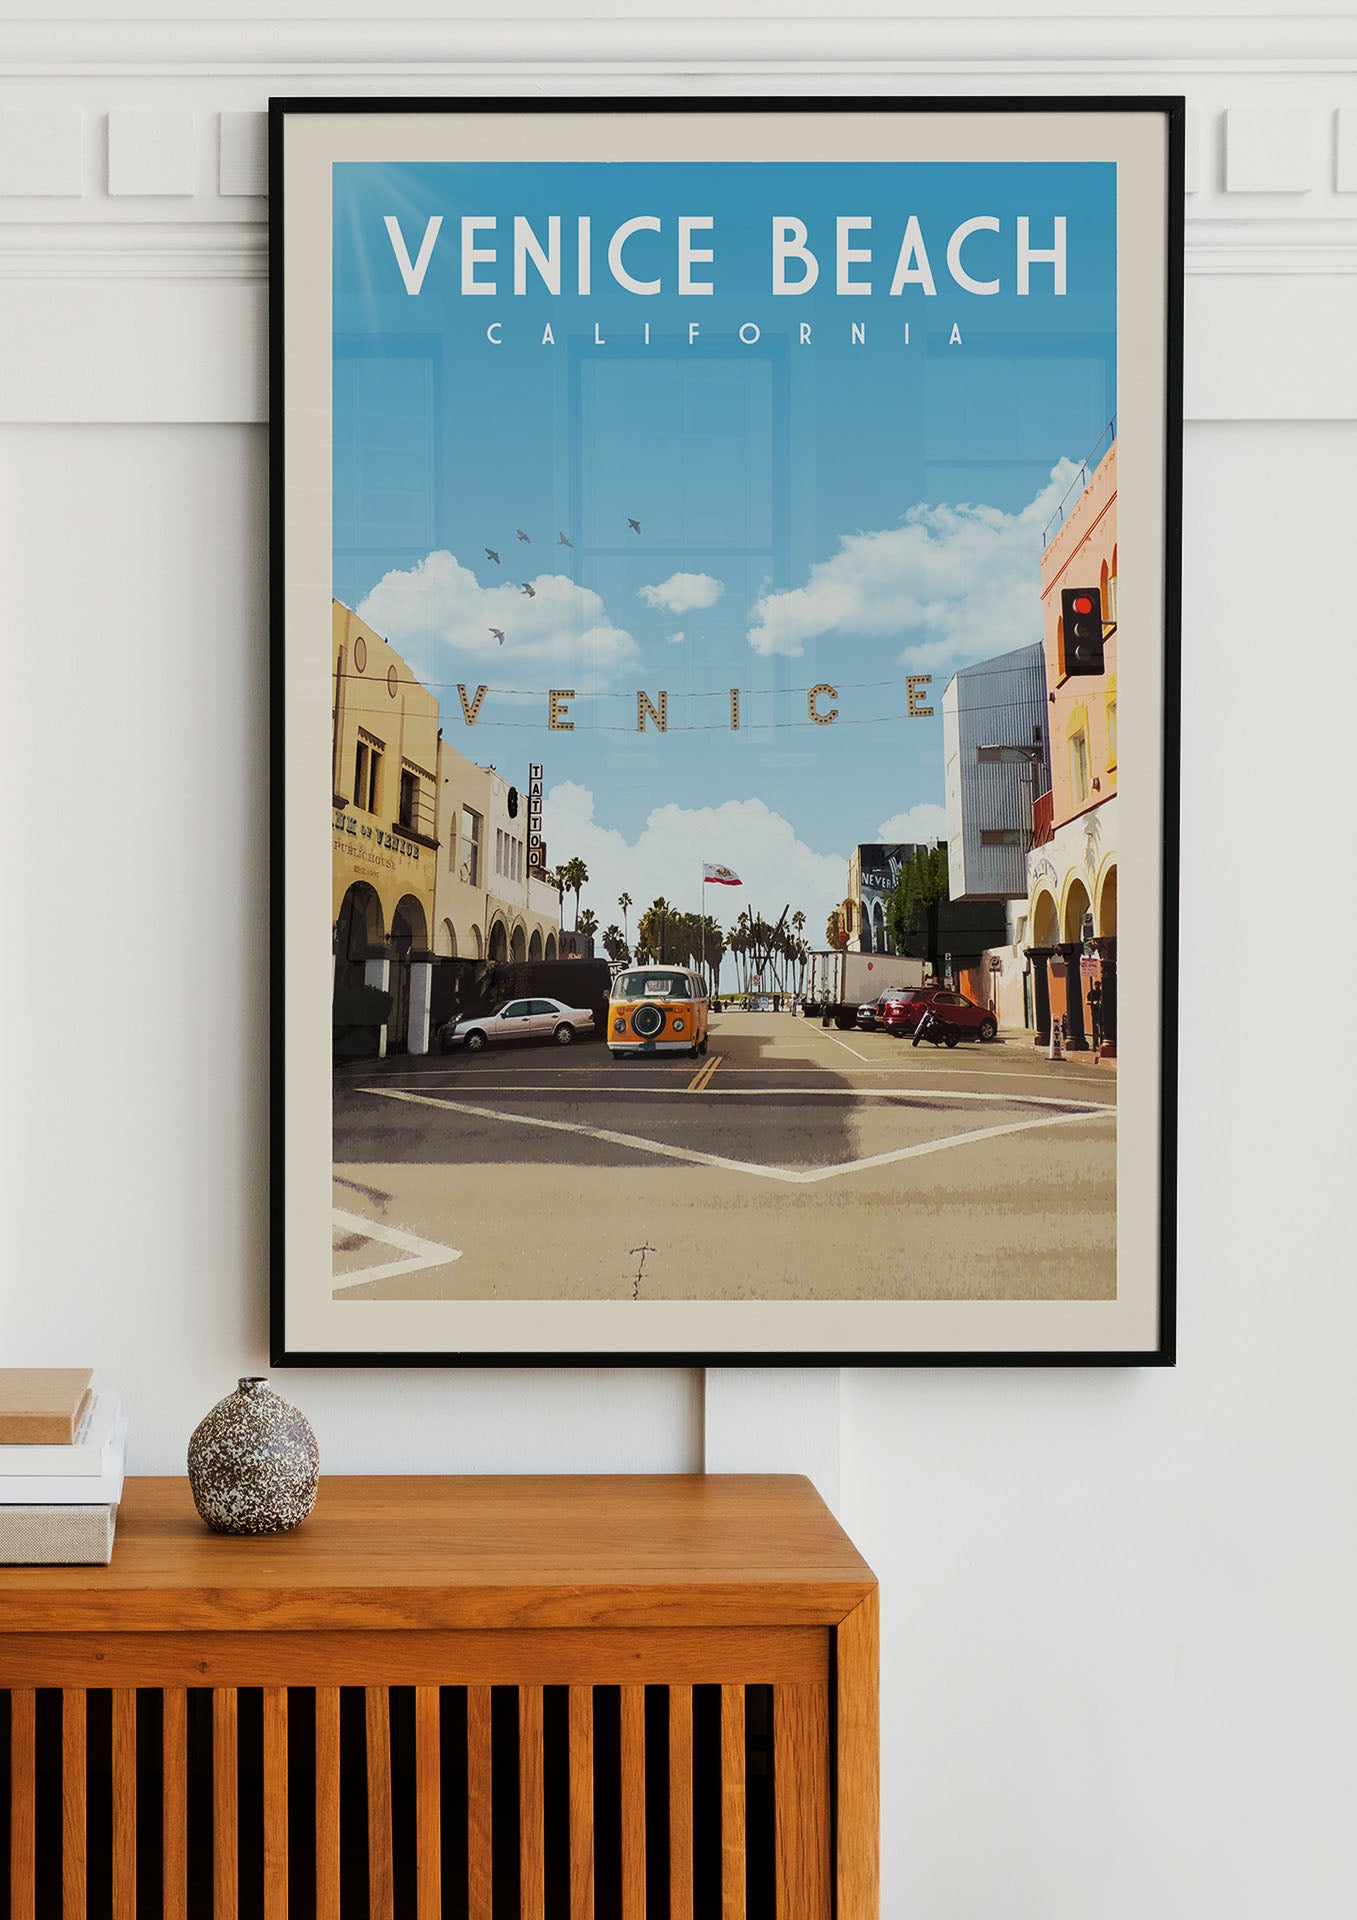 Venice Beach, California - Vintage Travel Poster